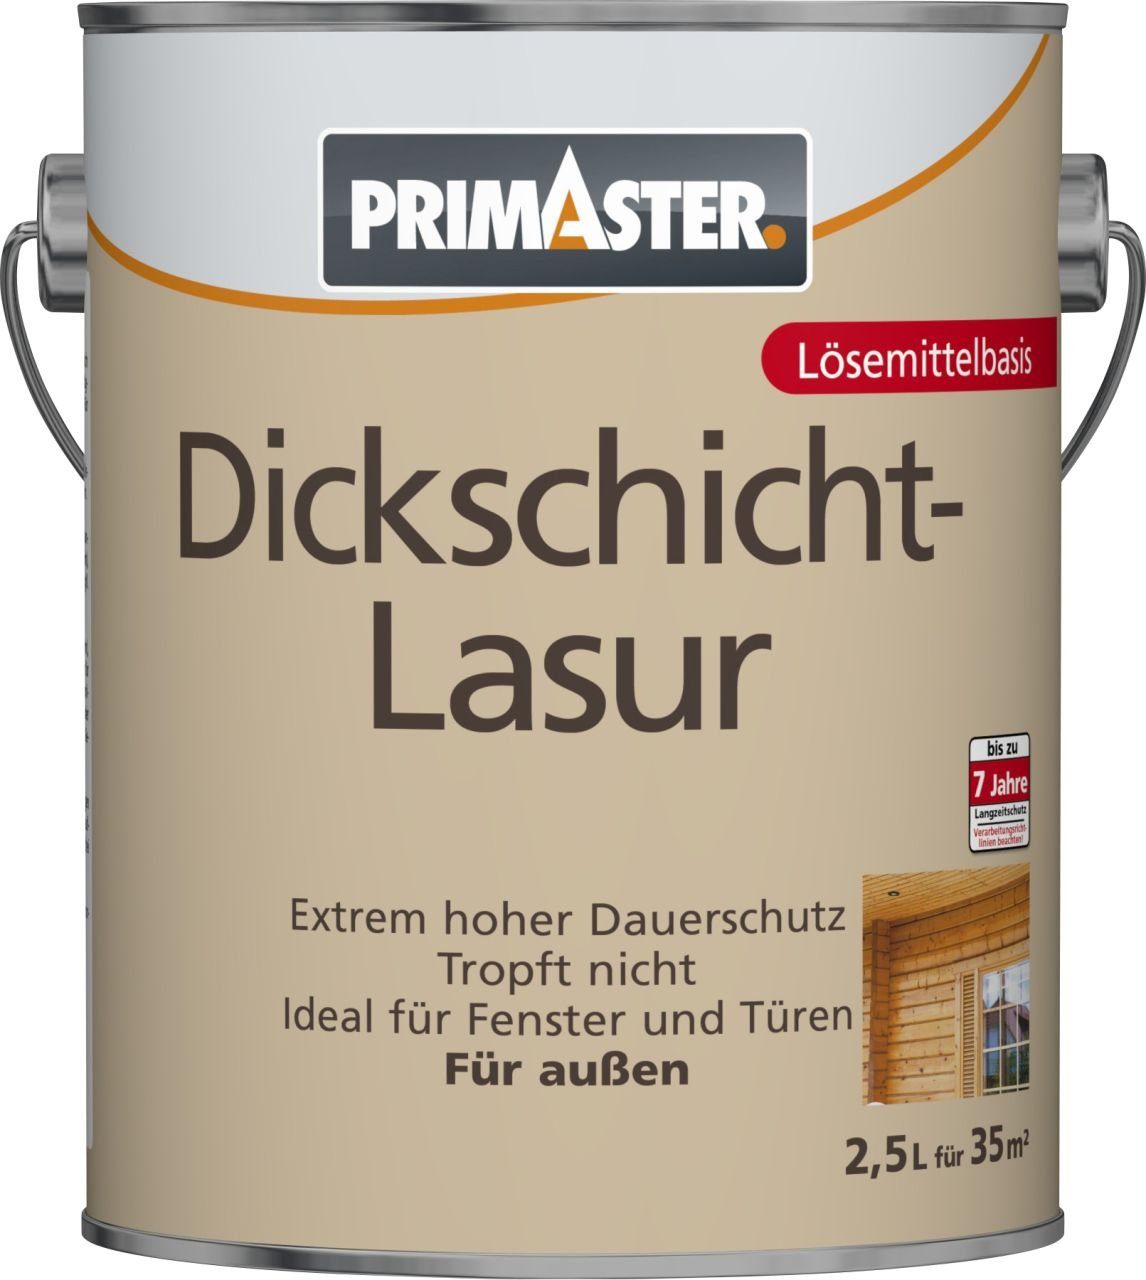 ebenholz Lasur L Dickschichtlasur Primaster 2,5 Primaster